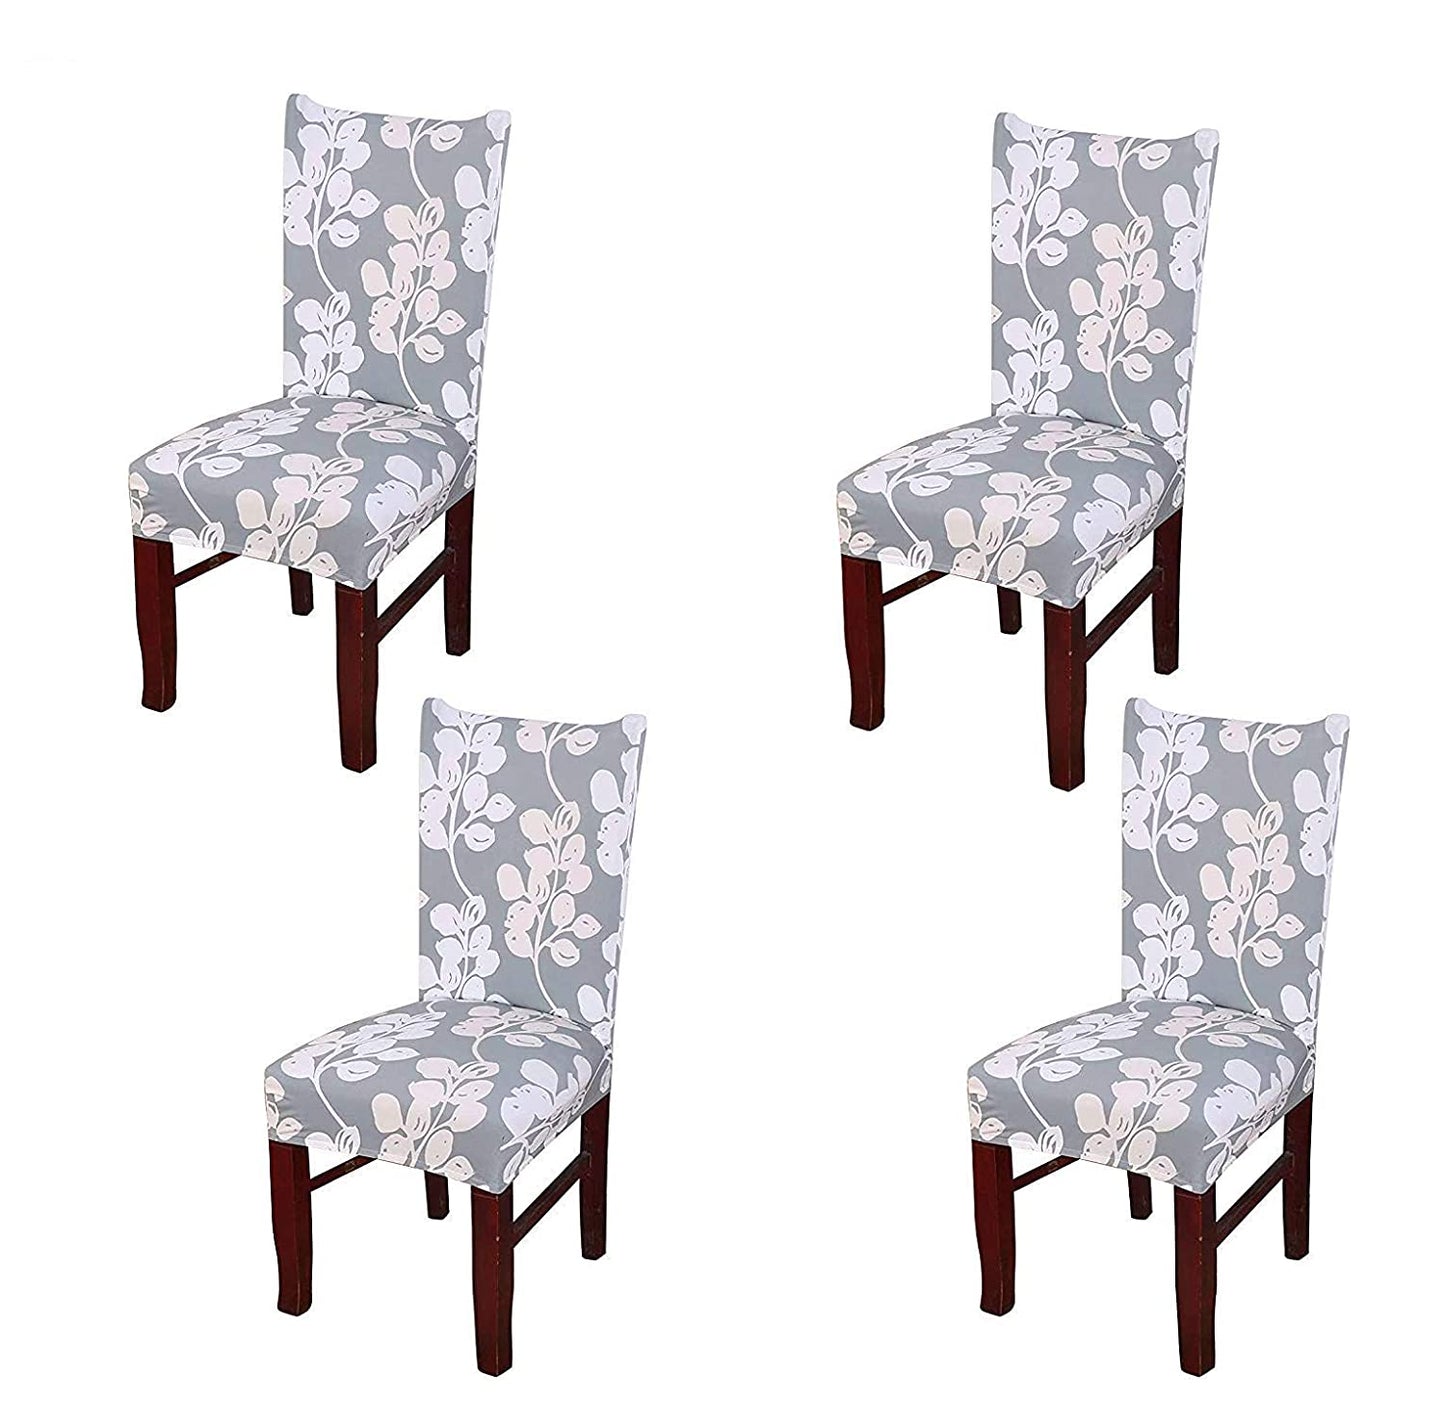 Printed Elastic Chair Cover - Grey Flower